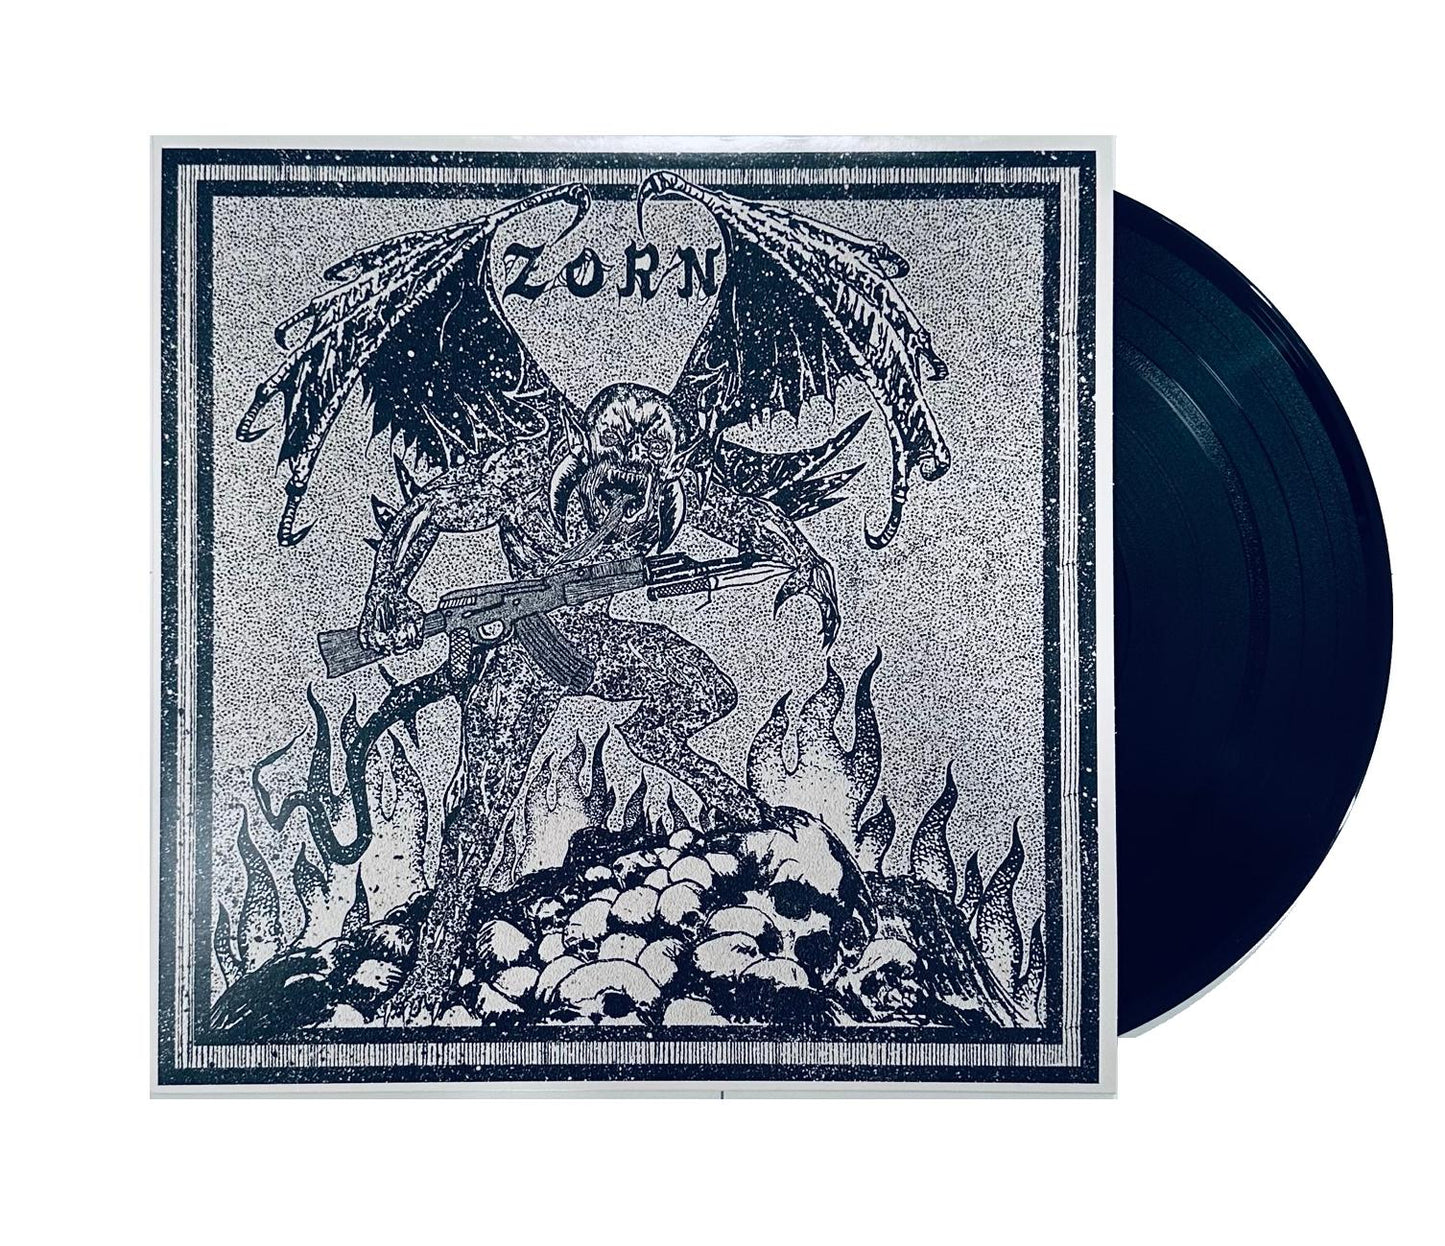 Zorn - Zorn S/T LP (black vinyl)